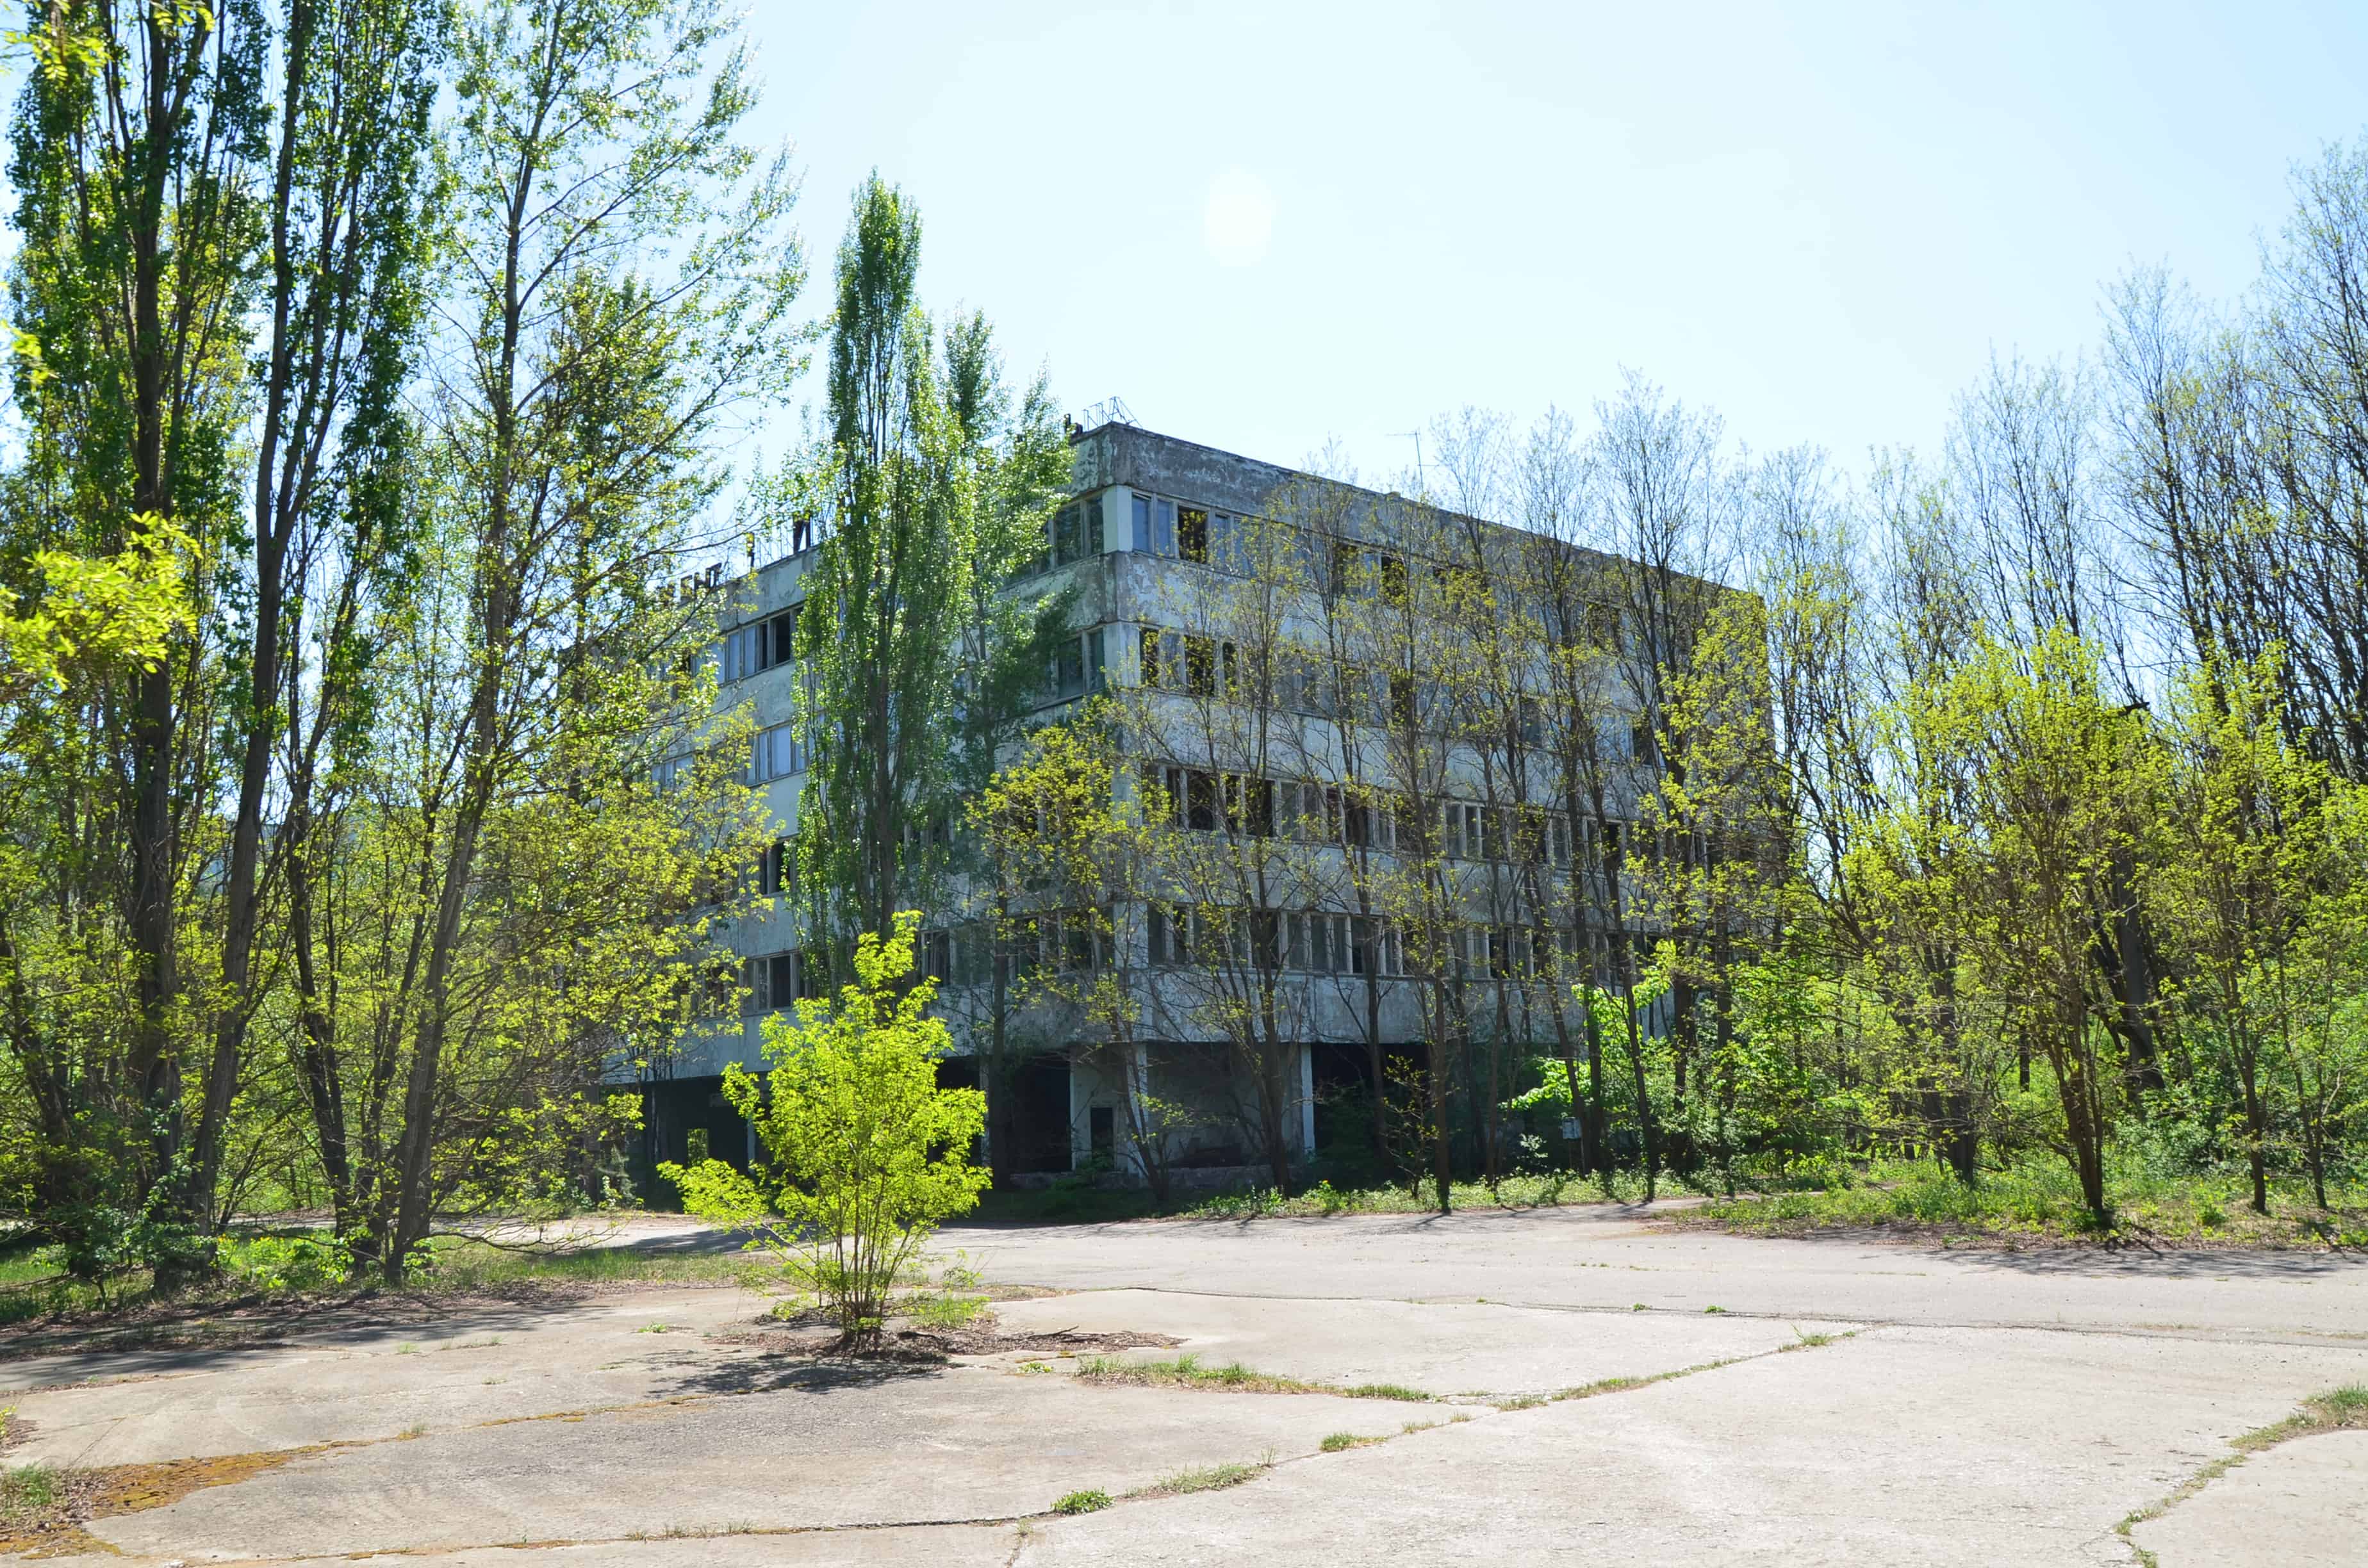 Consumer Services Center "Yubileyny" in Pripyat, Chernobyl Exclusion Zone, Ukraine